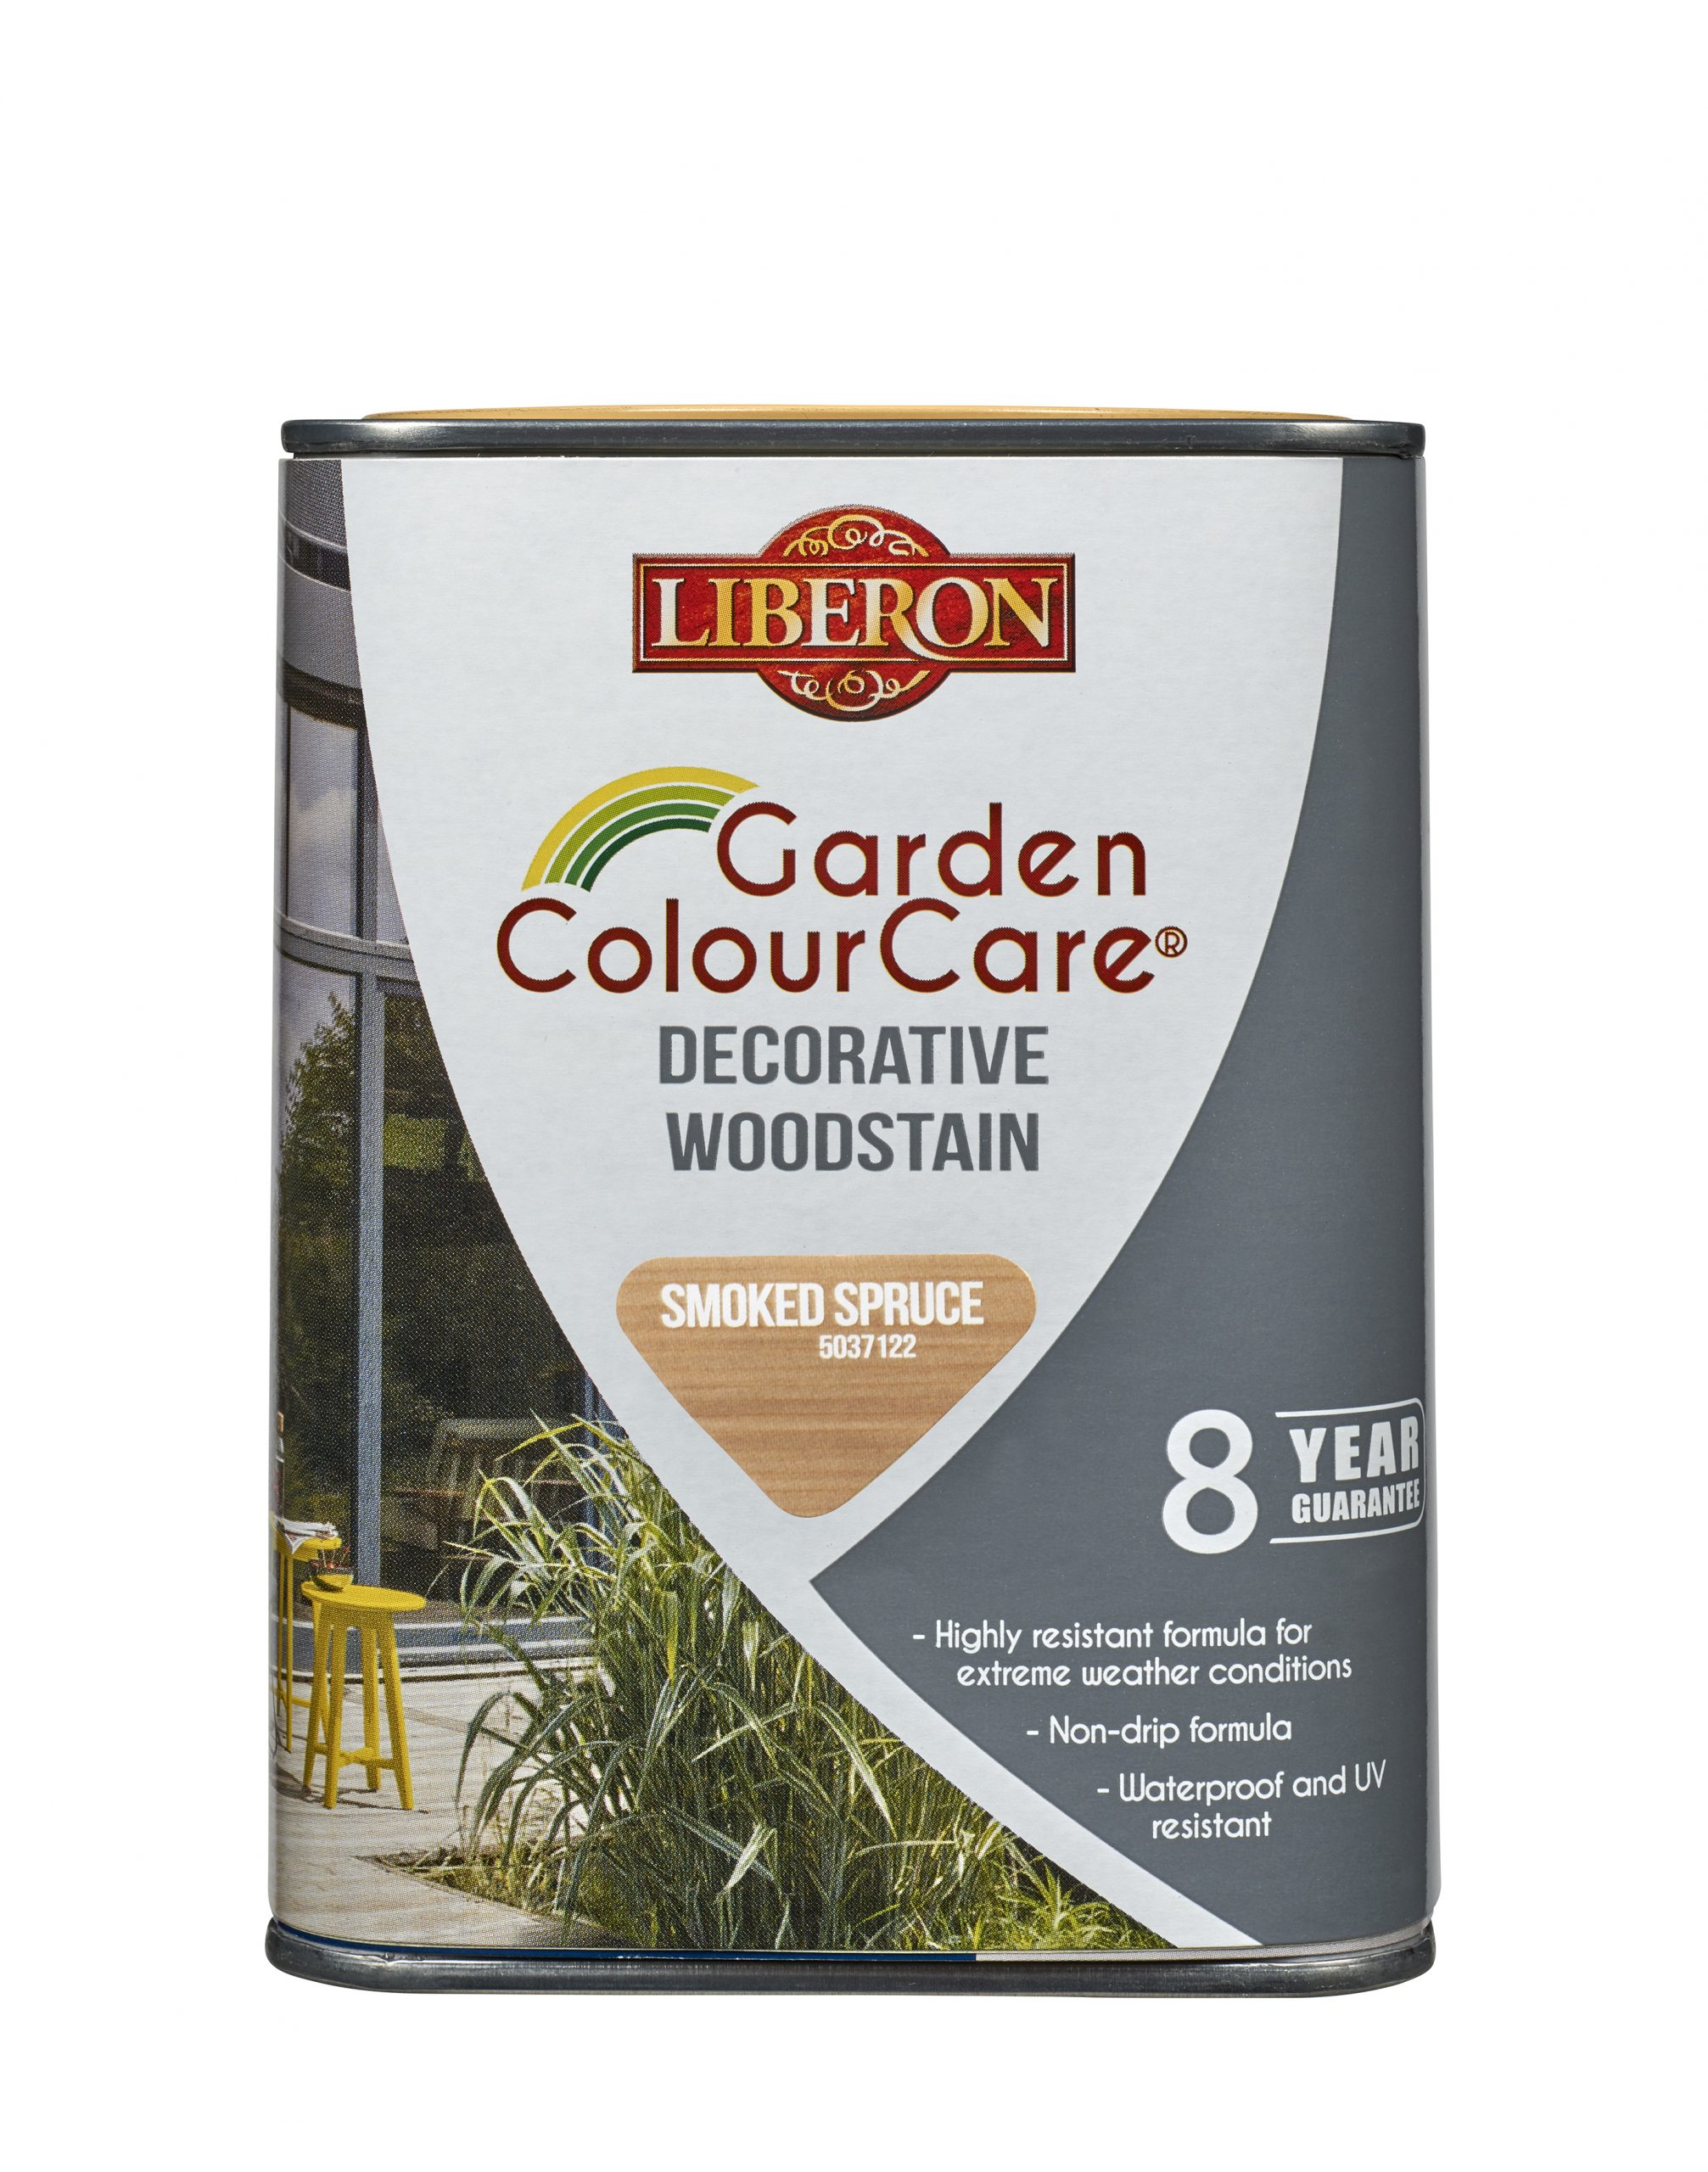 Liberon Garden ColourCare Decorative Woodstain Smoked Spruce 2.5L